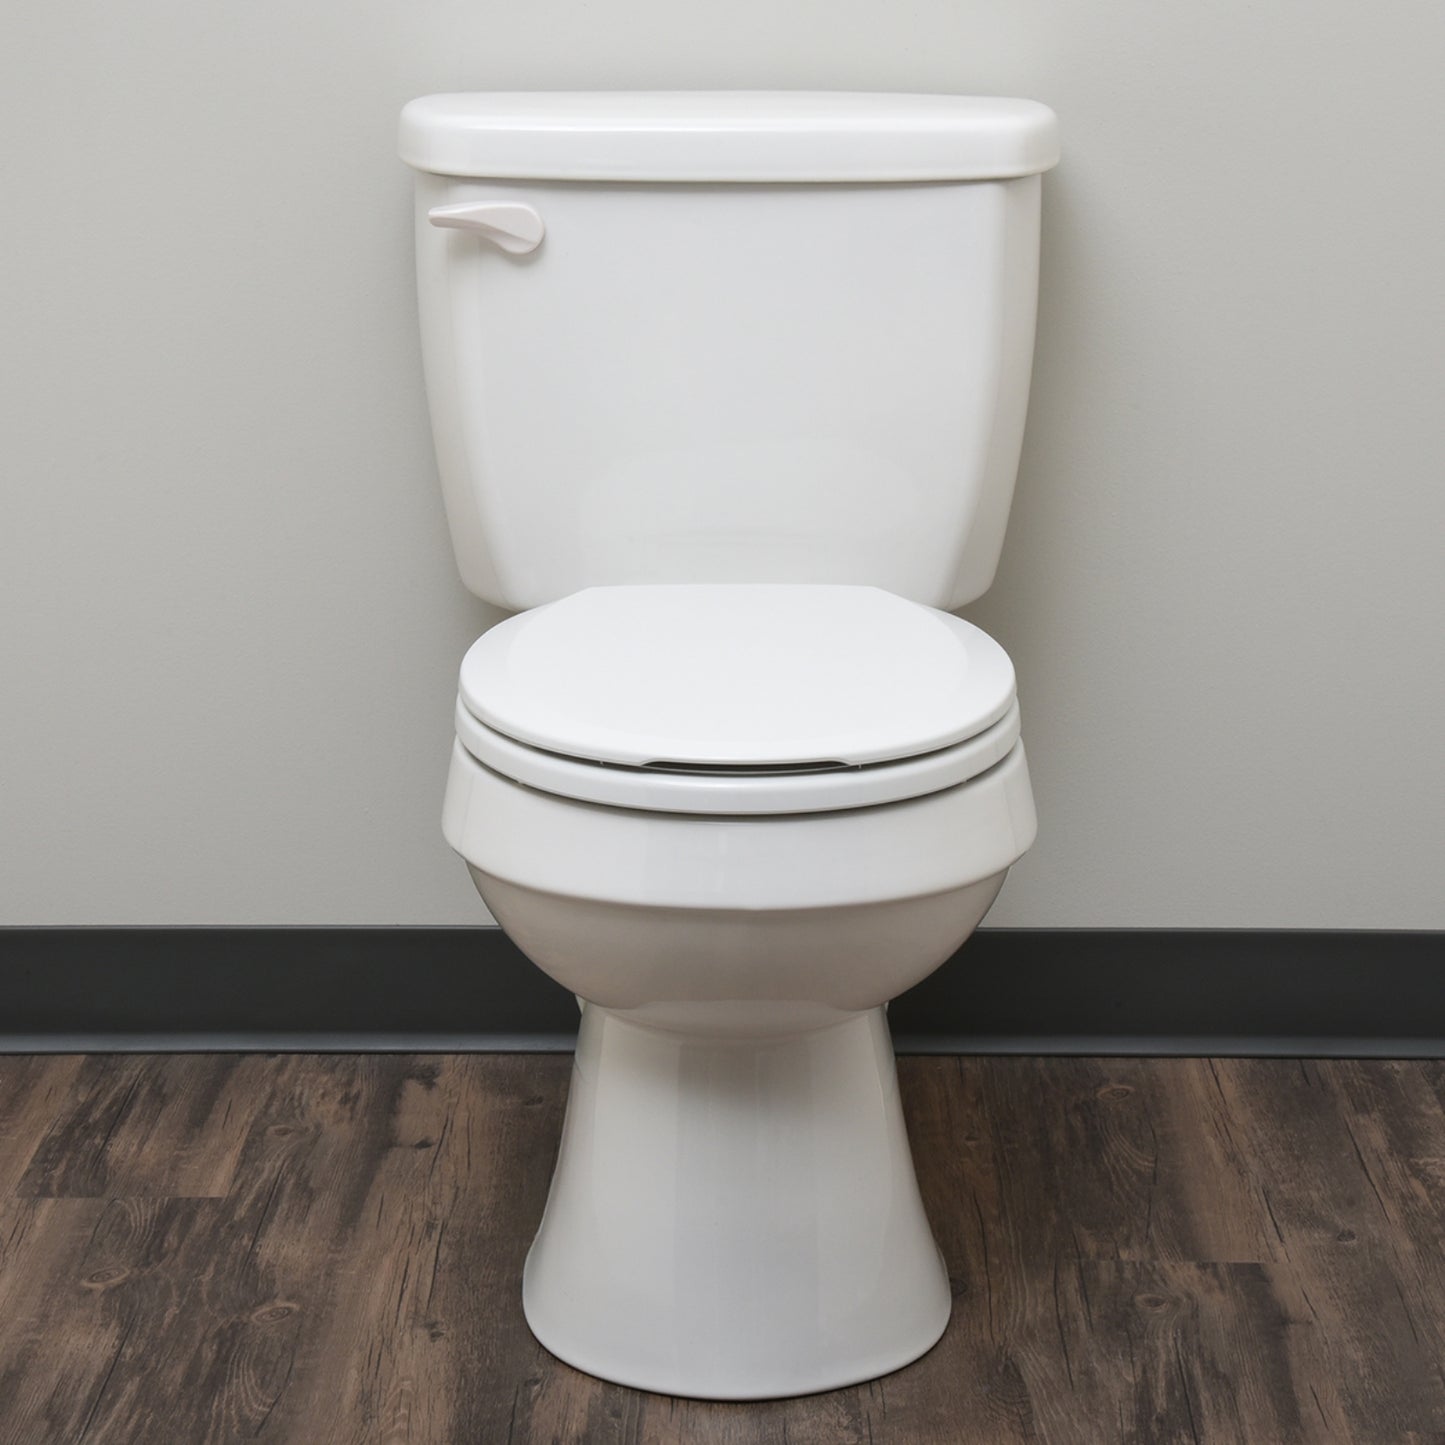 Hausen Universal Economy Toilet Lever, White, 1-Pack, Left-Front Side Mount